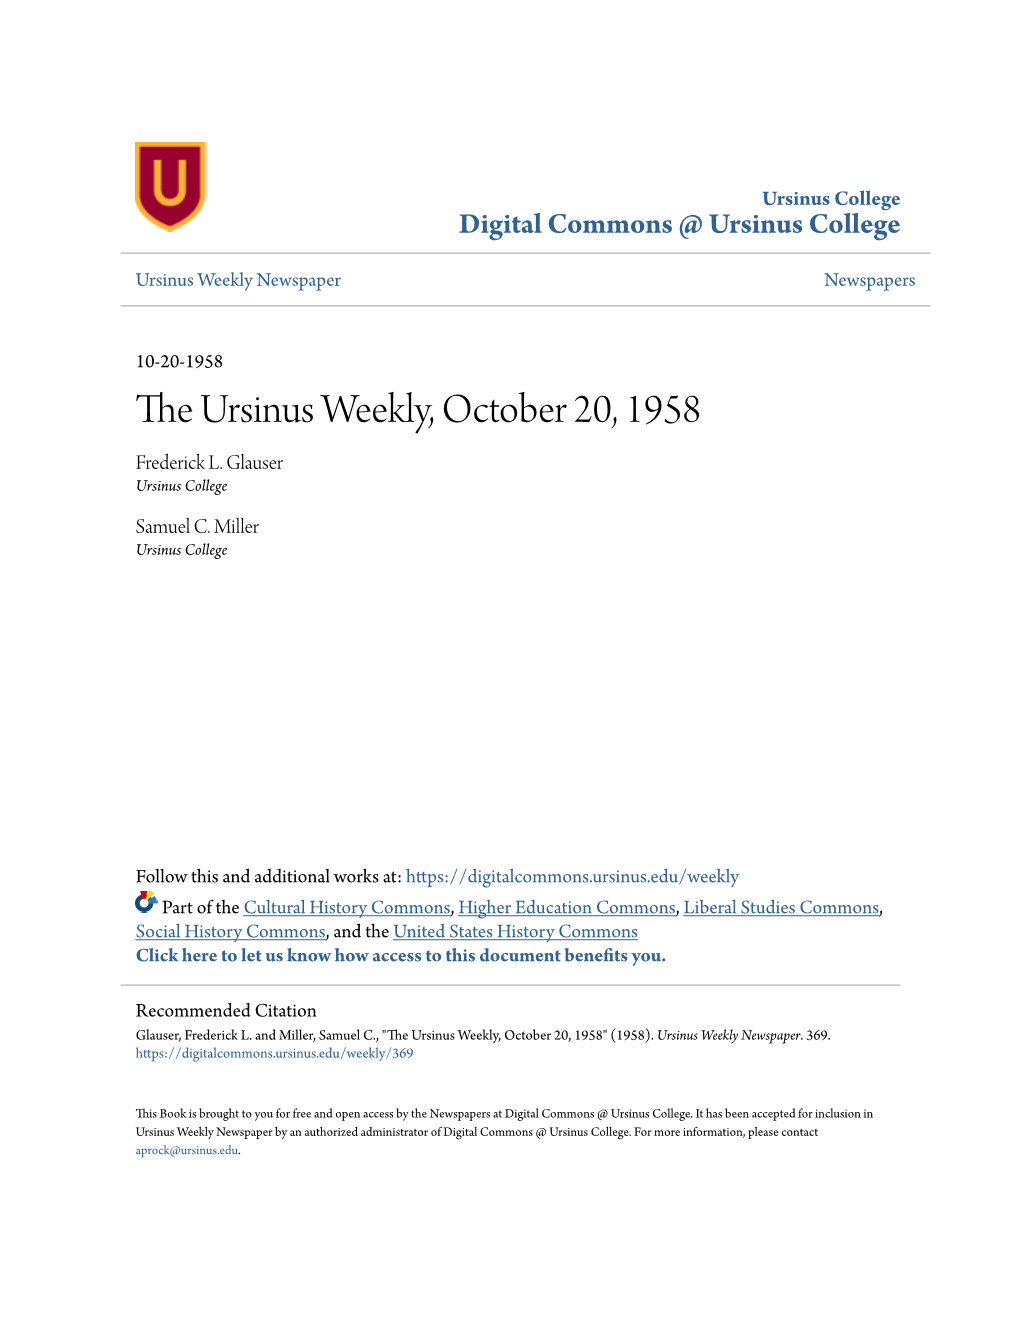 The Ursinus Weekly, October 20, 1958